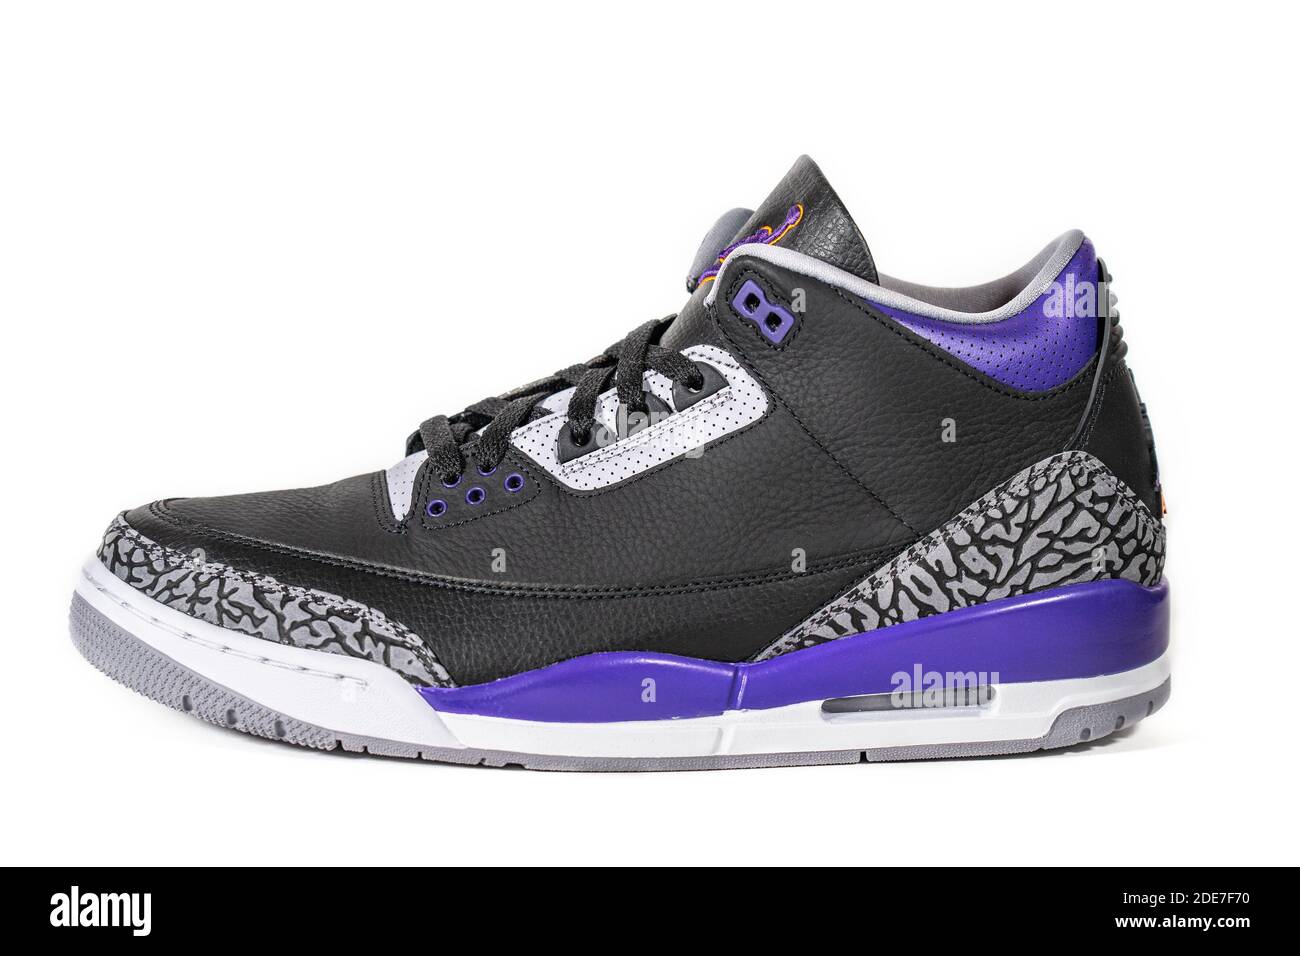 Air Jordan 3 Retro Court Purple - legendäre berühmte Nike und Jordan Marke Retro Basketball Sneaker oder Sportschuhe, jetzt Mode und Lifestyle Schuhe : Moskau, Russland - November 2020. Stockfoto